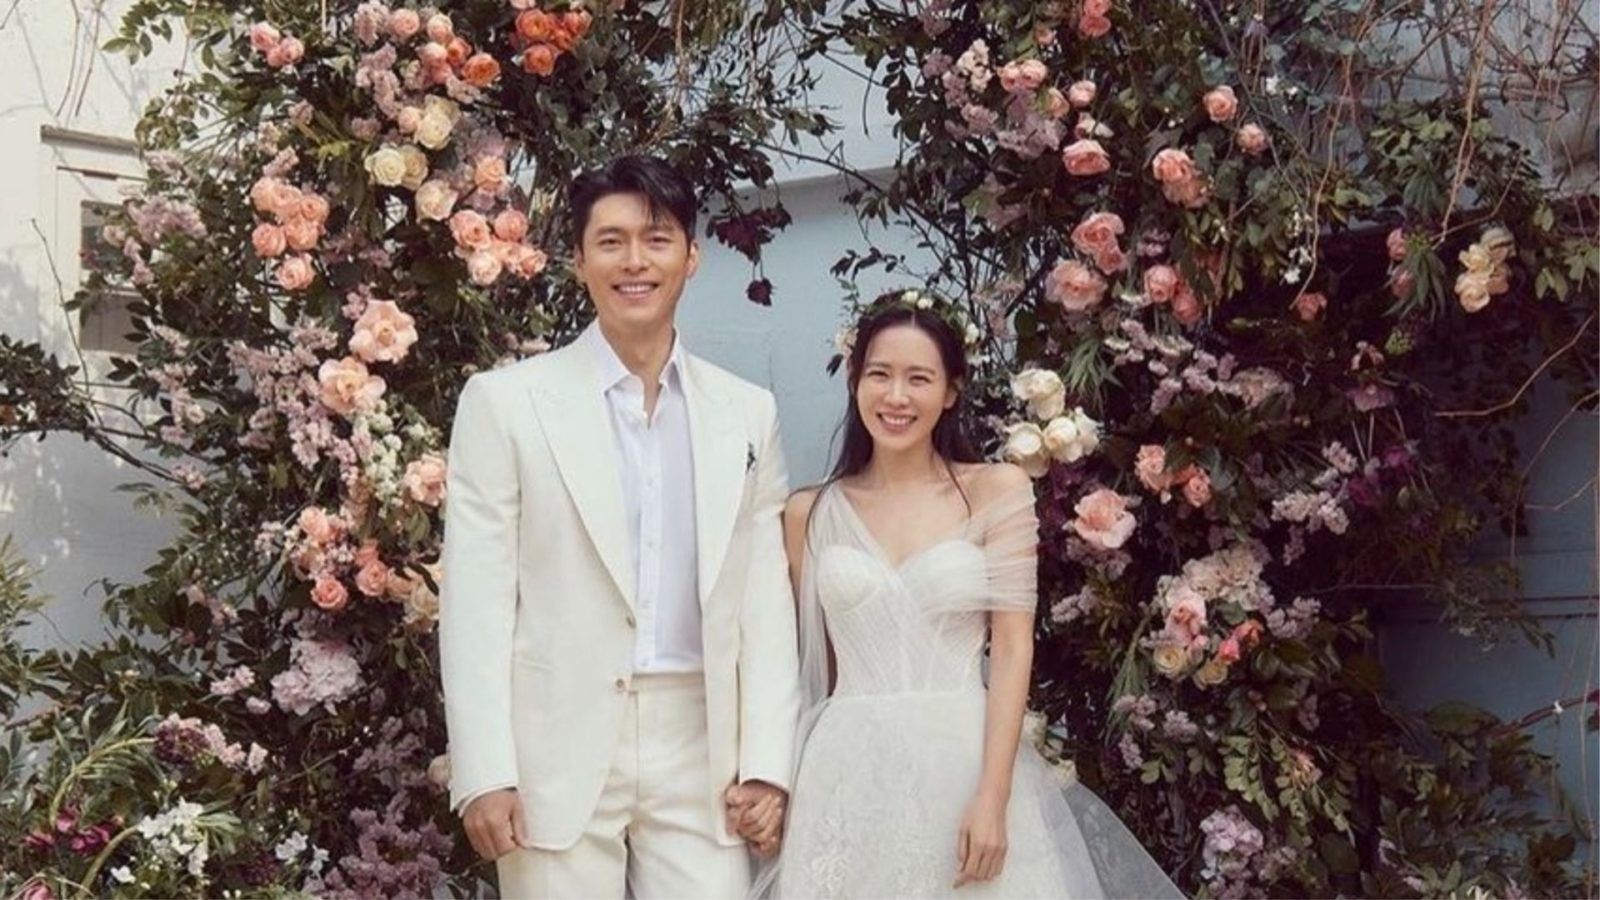 ‘Crash Landing On You’ stars Hyun Bin and Son Ye-jin got married!